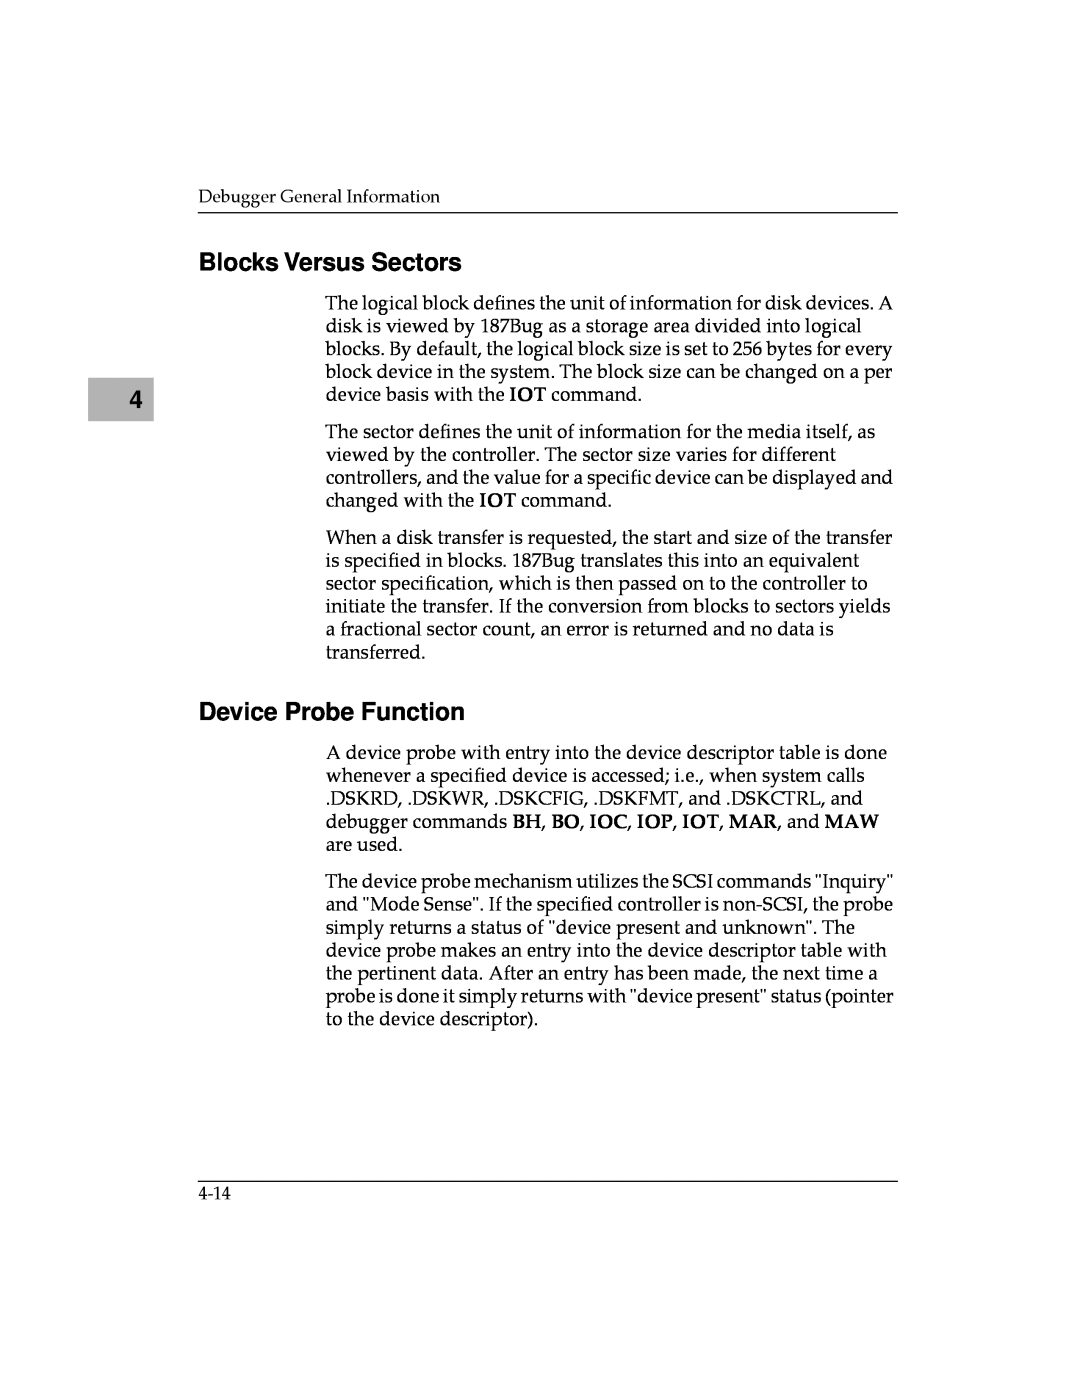 Motorola MVME187 manual Blocks Versus Sectors, Device Probe Function 